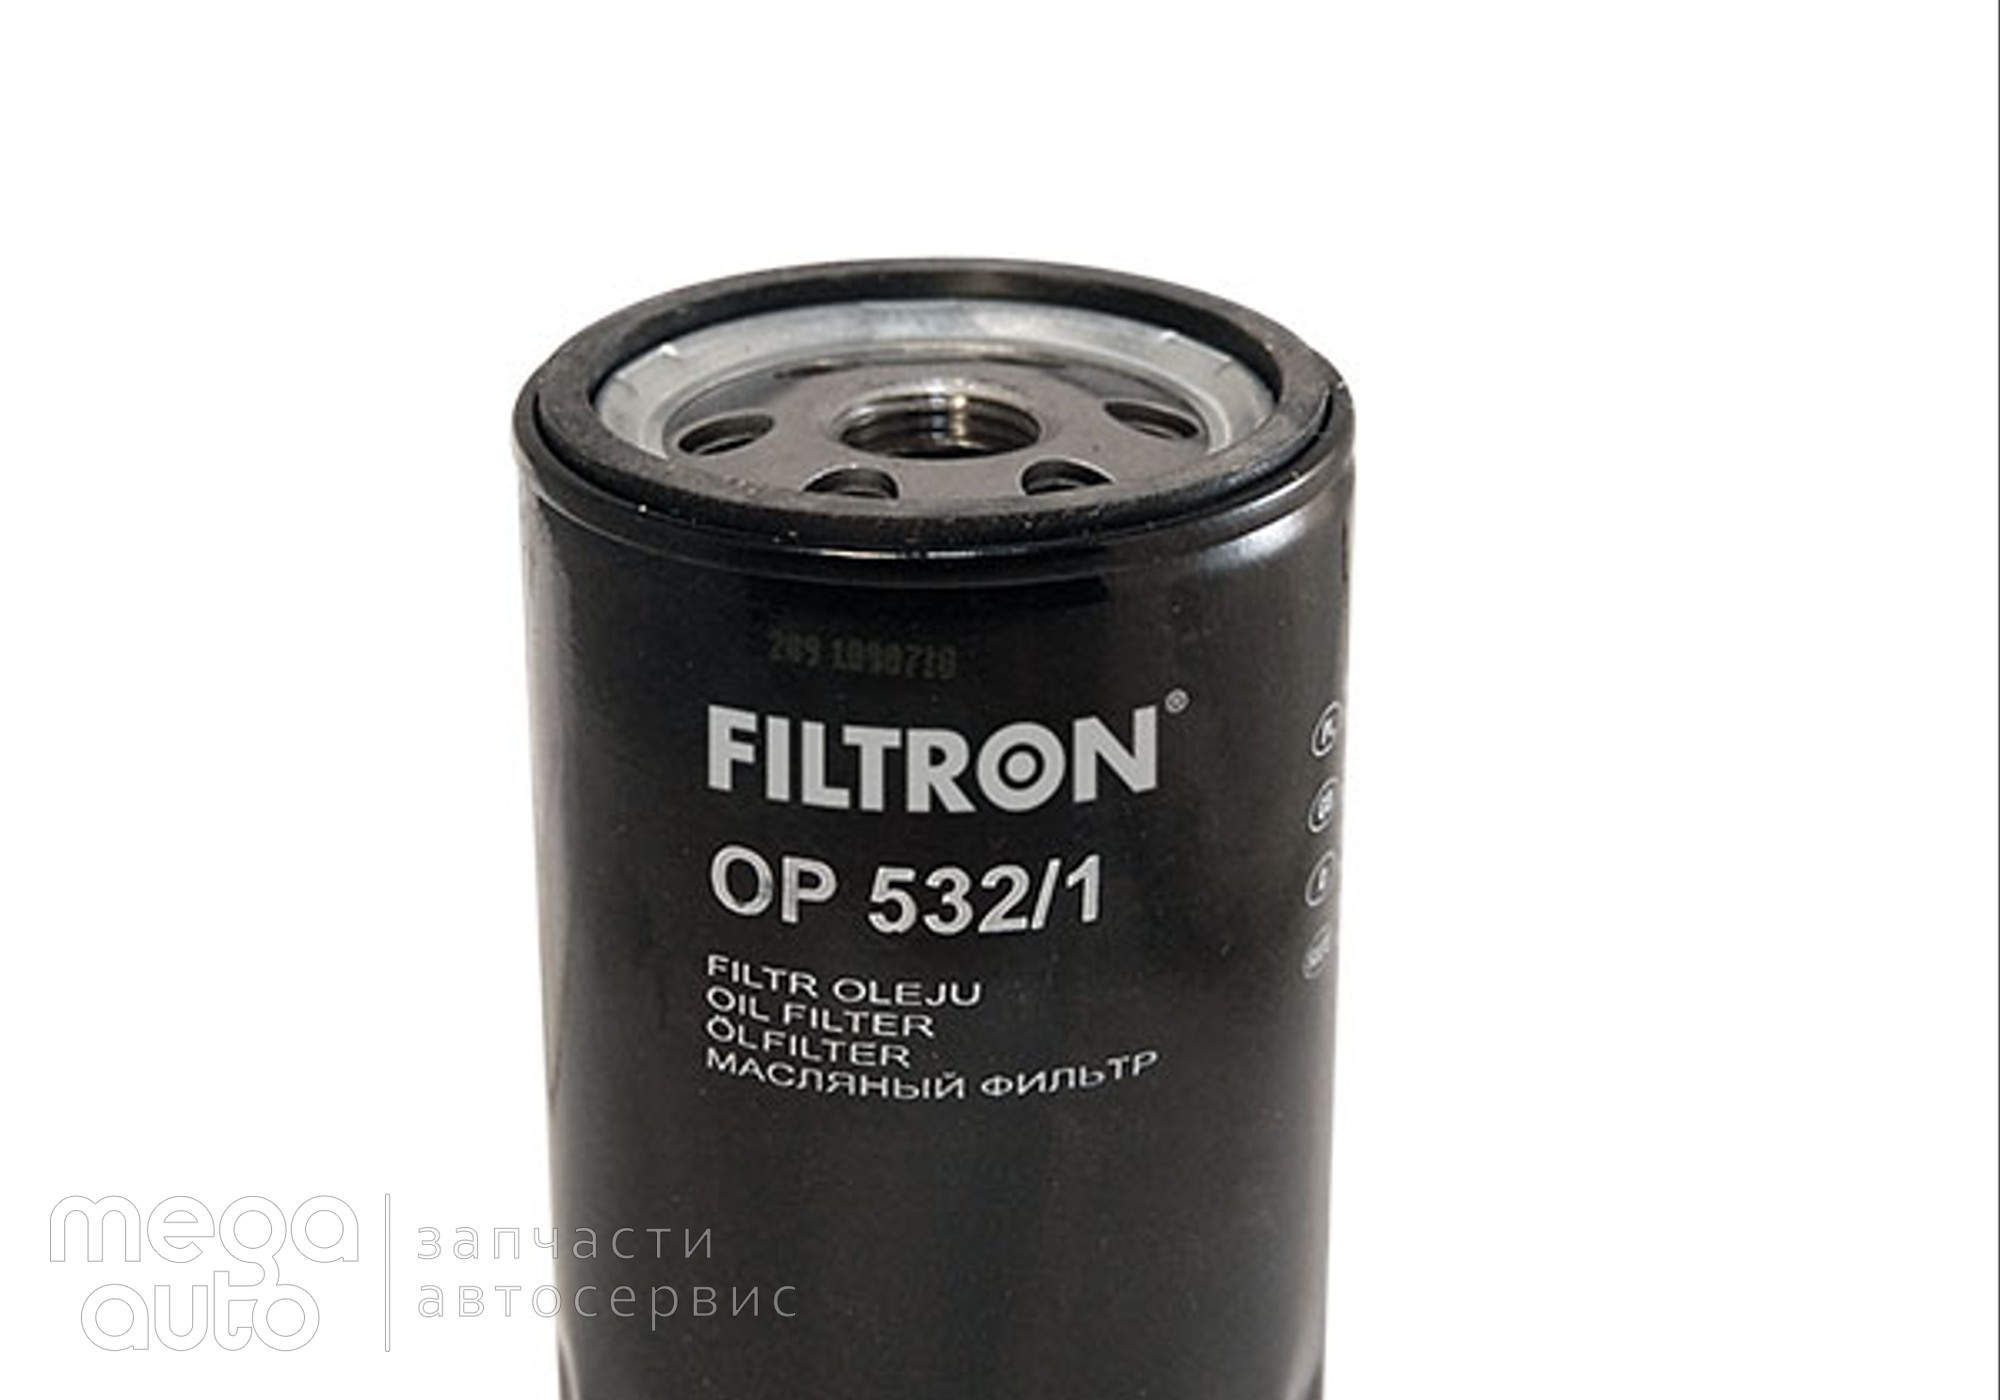 96565412 Масляный фильтр форд мондео, эскорт(Filtron) для Suzuki Splash